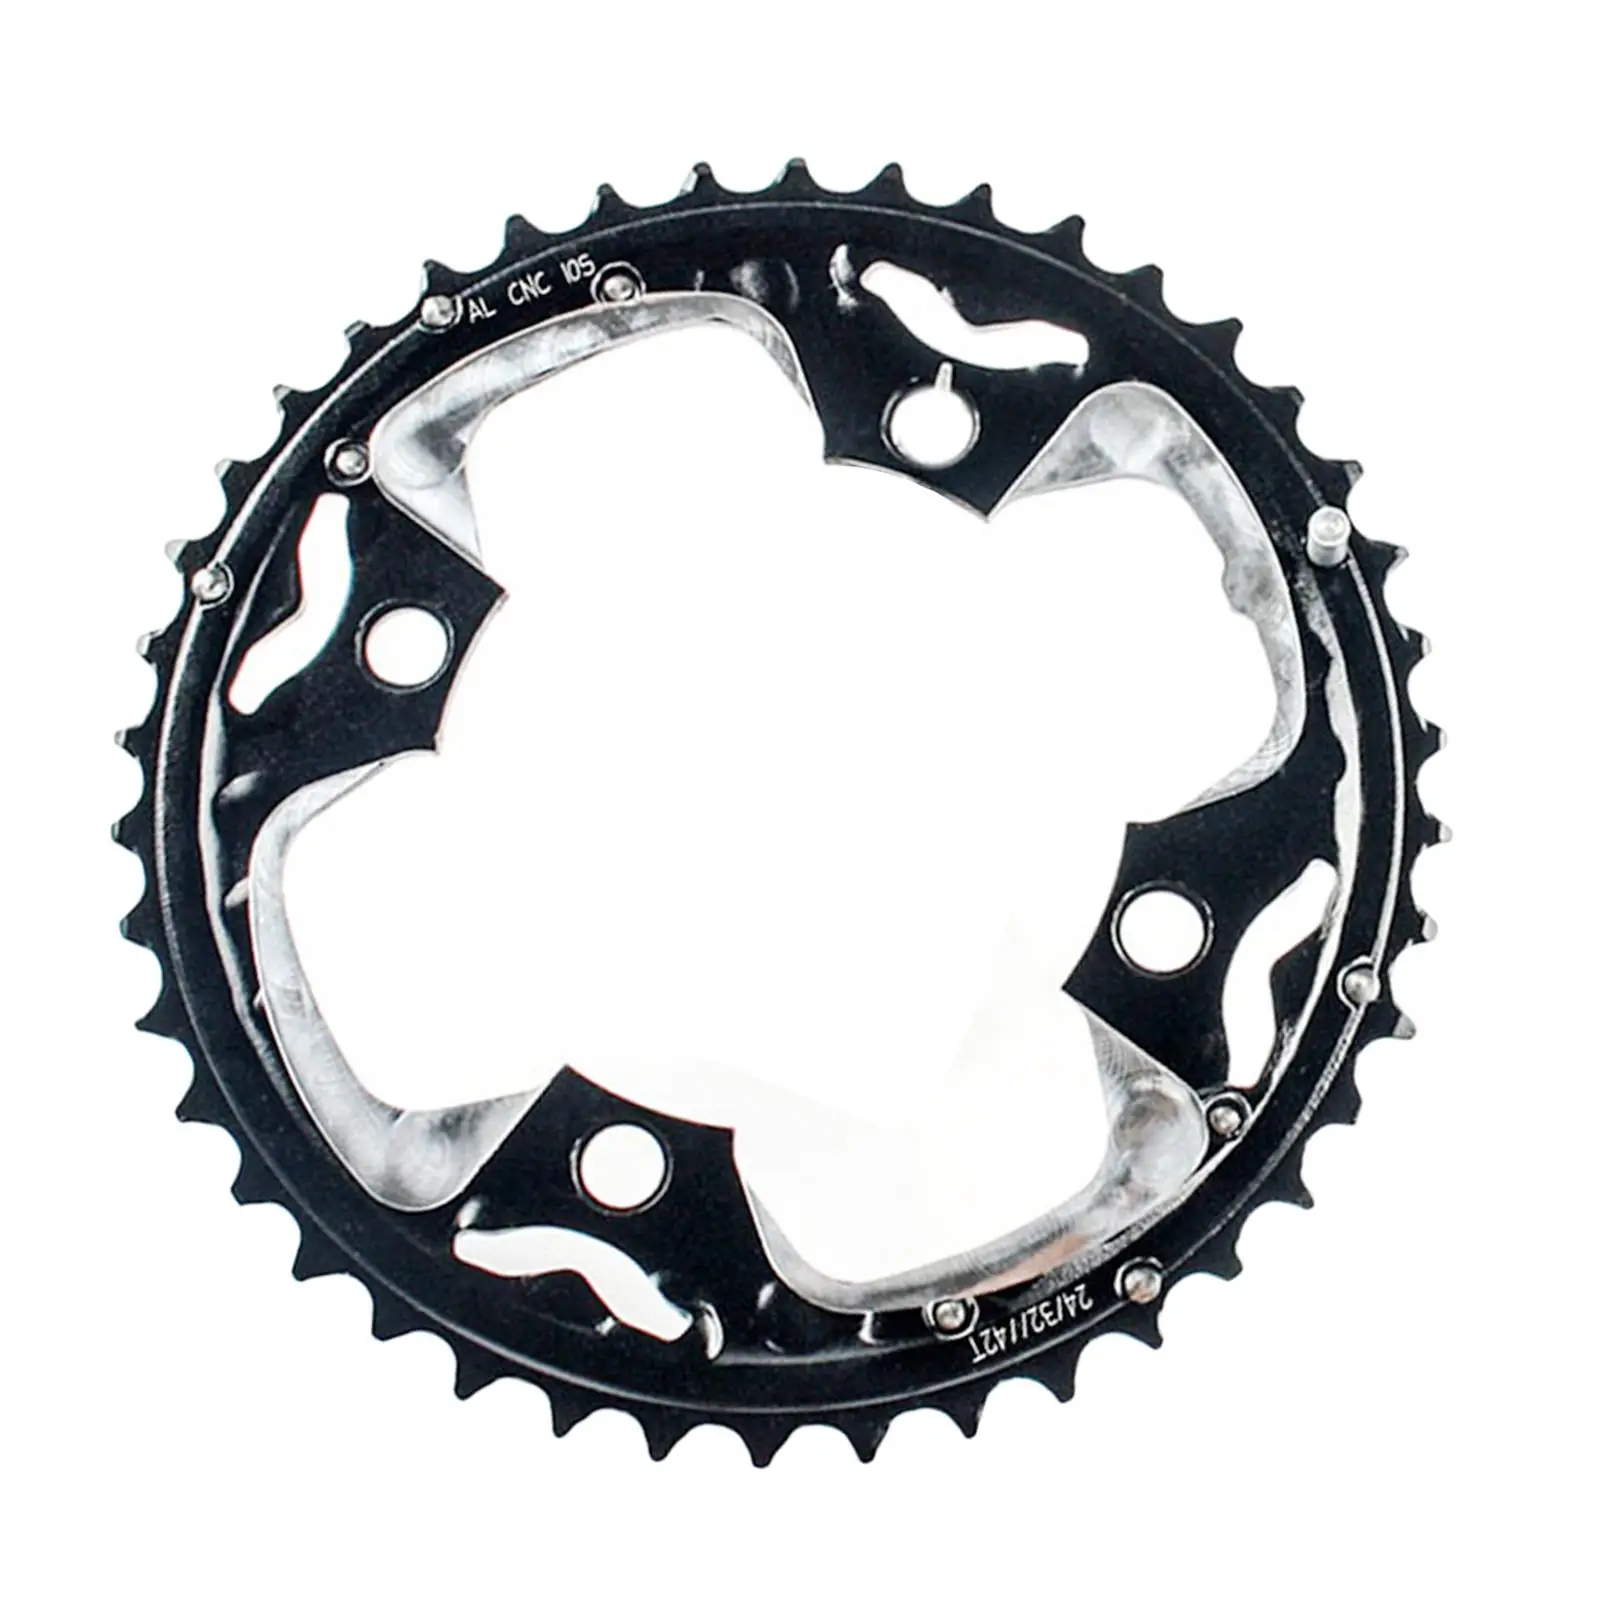 Round Bike Chainring BCD 104mm Sprocket Bicycle Crankset Chainwheel Chain Ring for Mountain Bike Folding Bike Parts